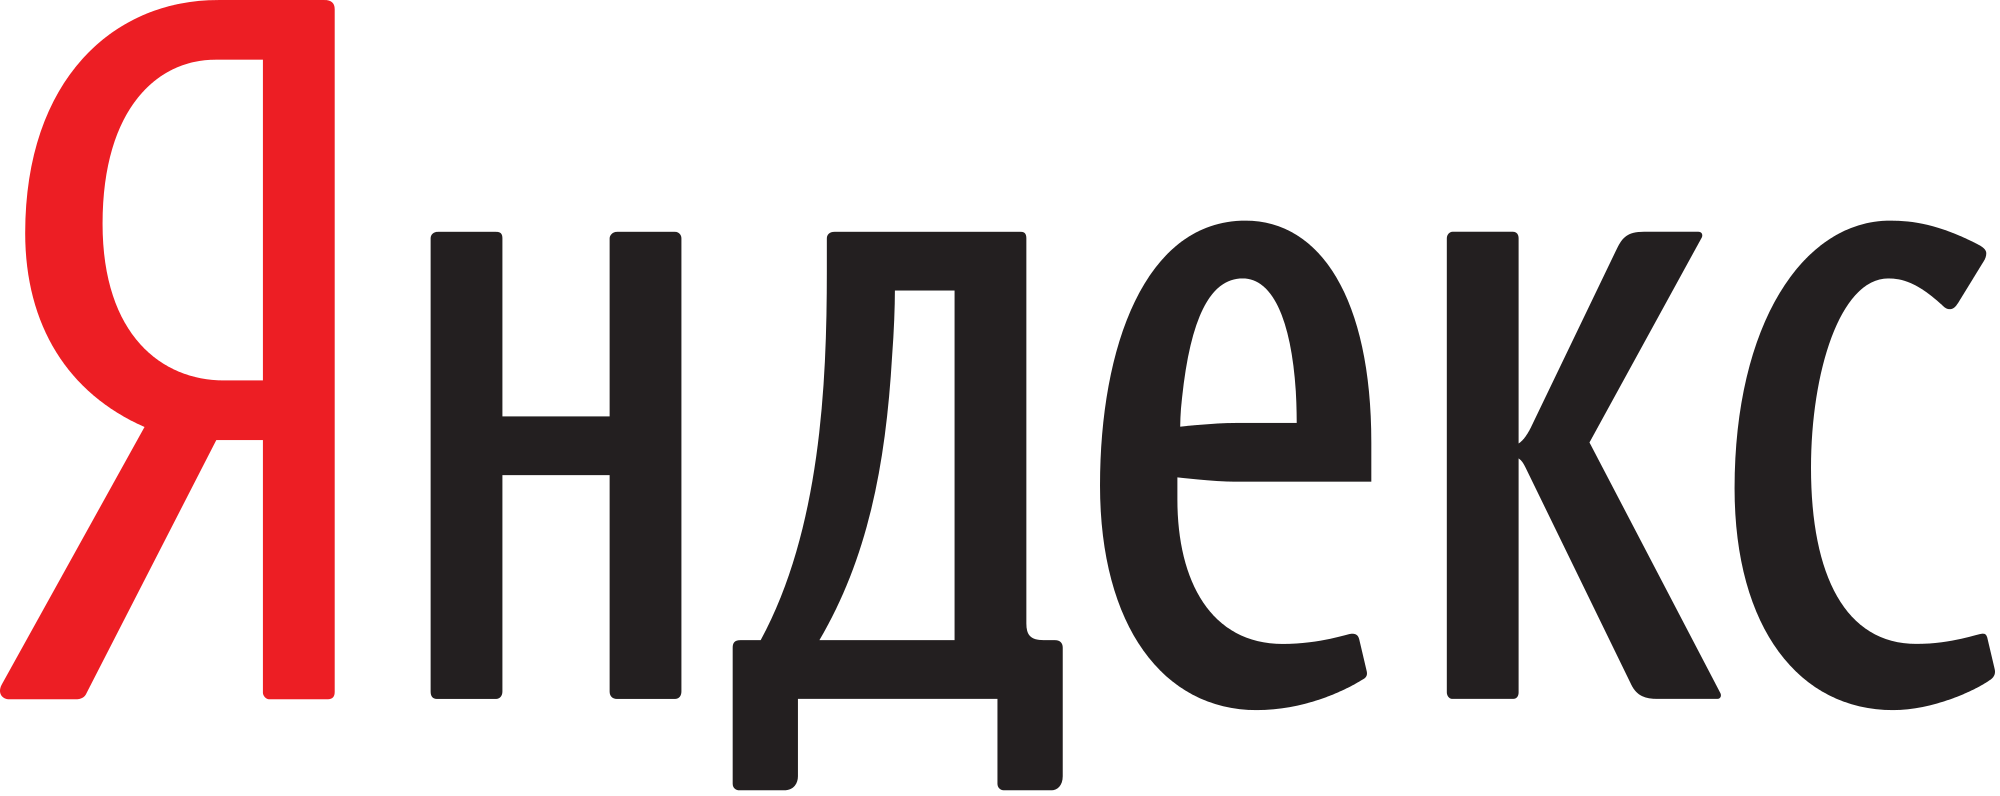 Open Hdpng.com  - Yandex, Transparent background PNG HD thumbnail